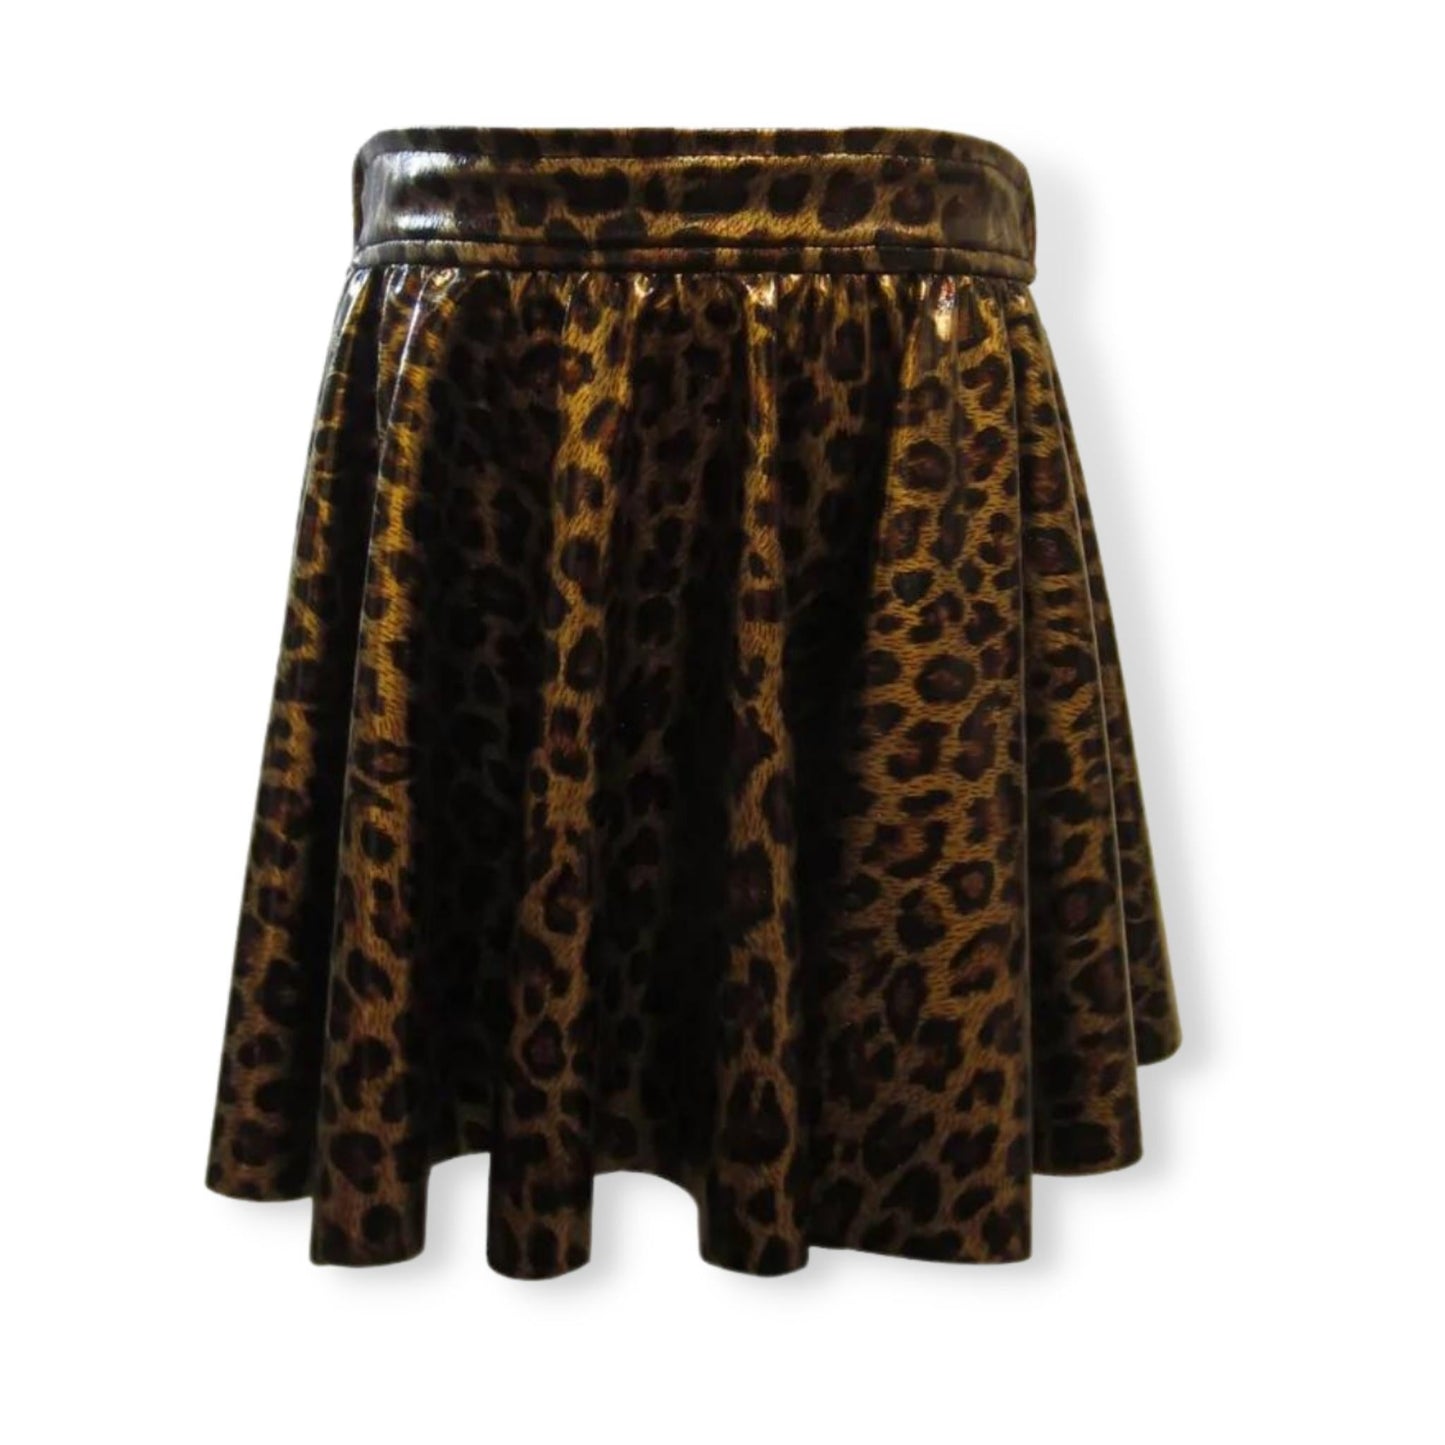 Little Mass Leopard Print Skater Skirt - a Spirit Animal - Skirts $60-$75 $60-$90 10